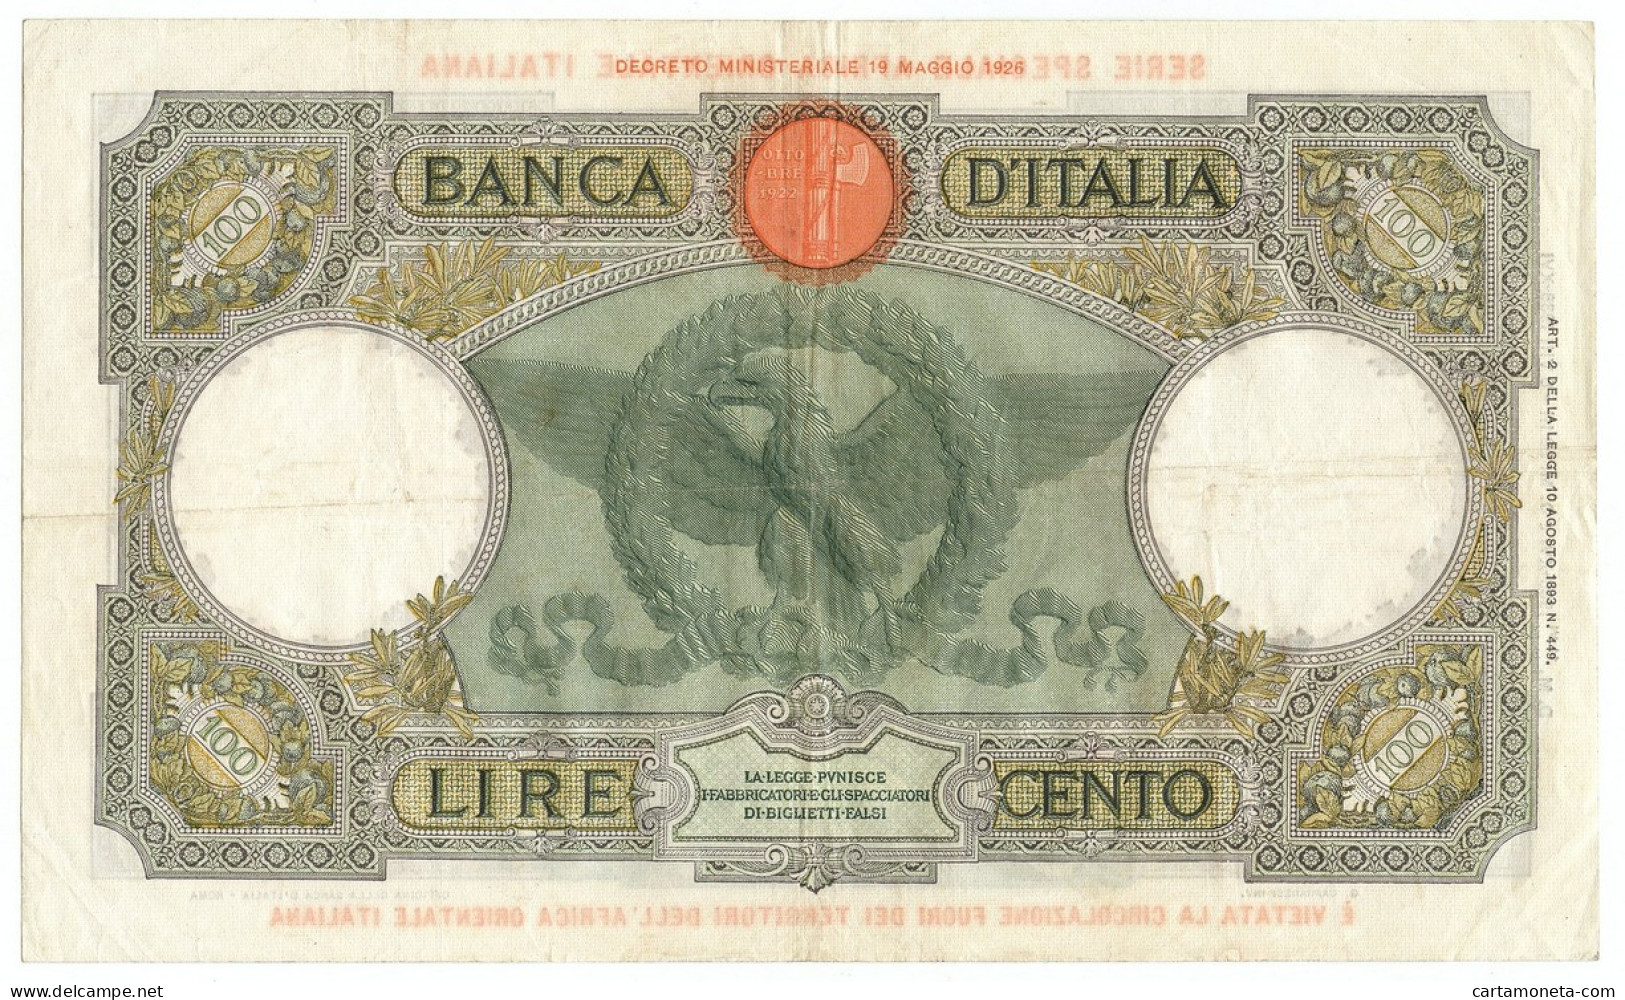 100 LIRE CAPRANESI AQUILA AFRICA ORIENTALE ITALIANA AOI 12/09/1938 BB+ - Italiaans Oost-Afrika